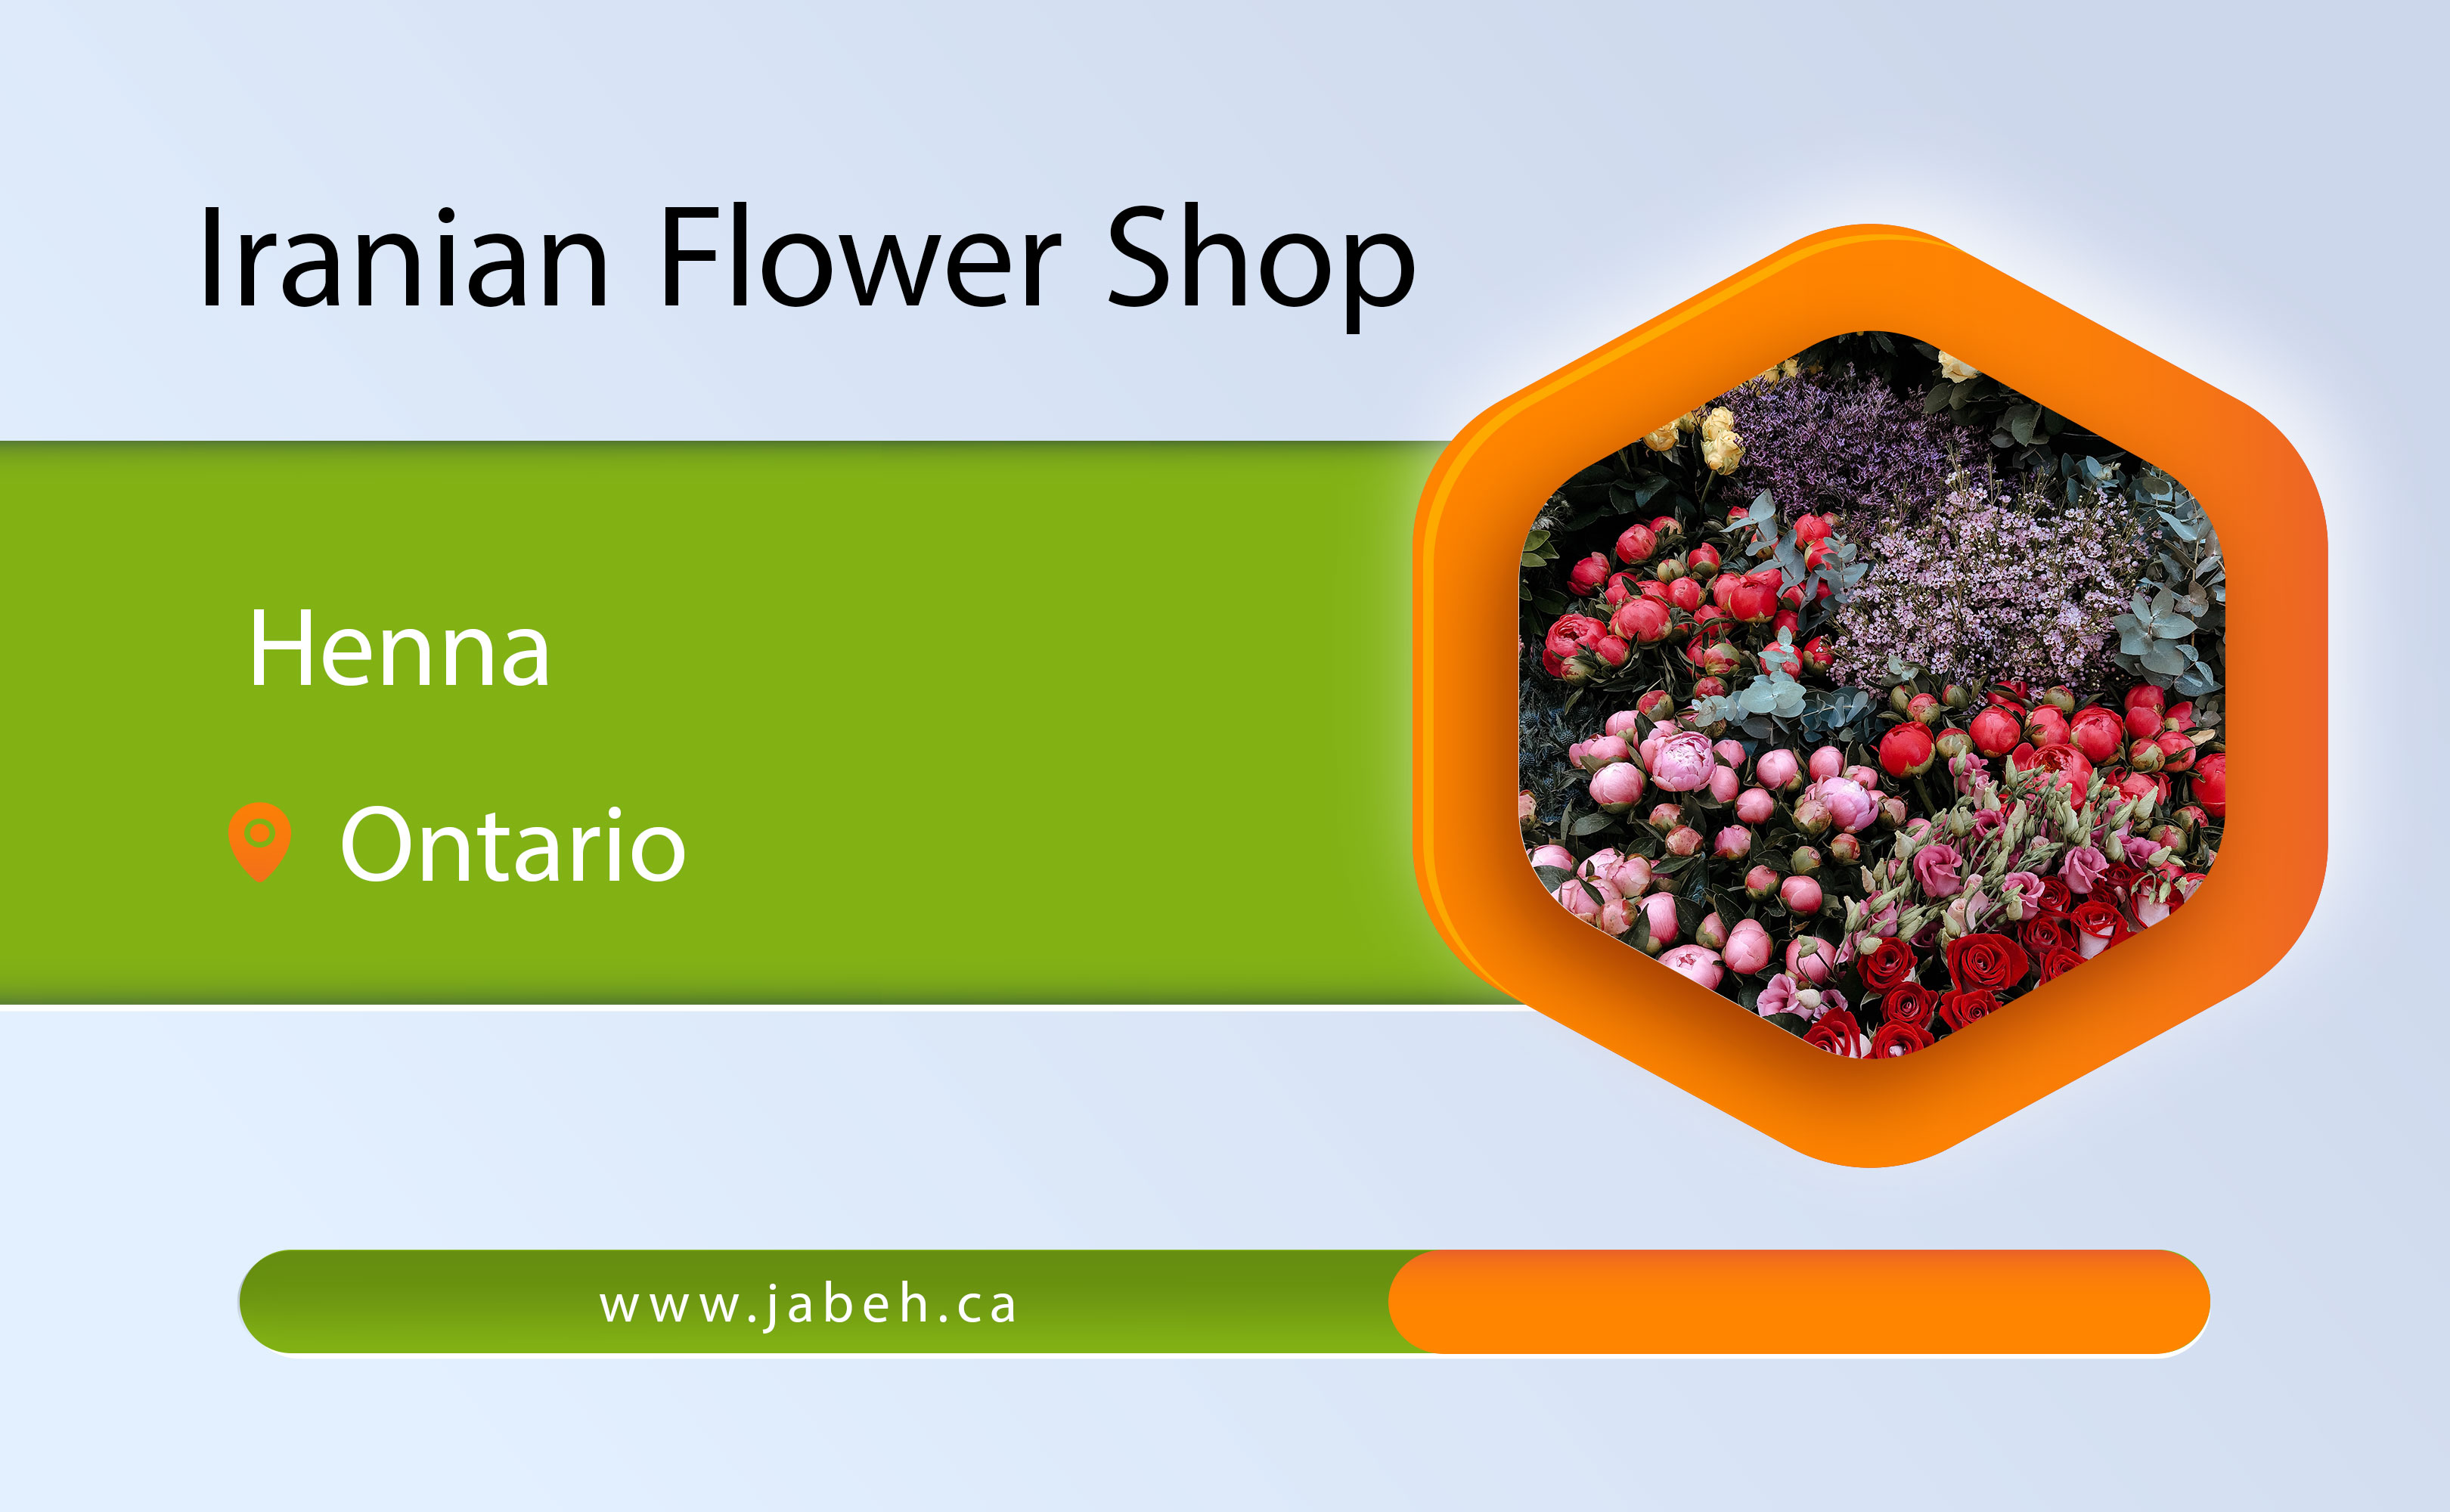 Iranian henna flower shop in Ontario